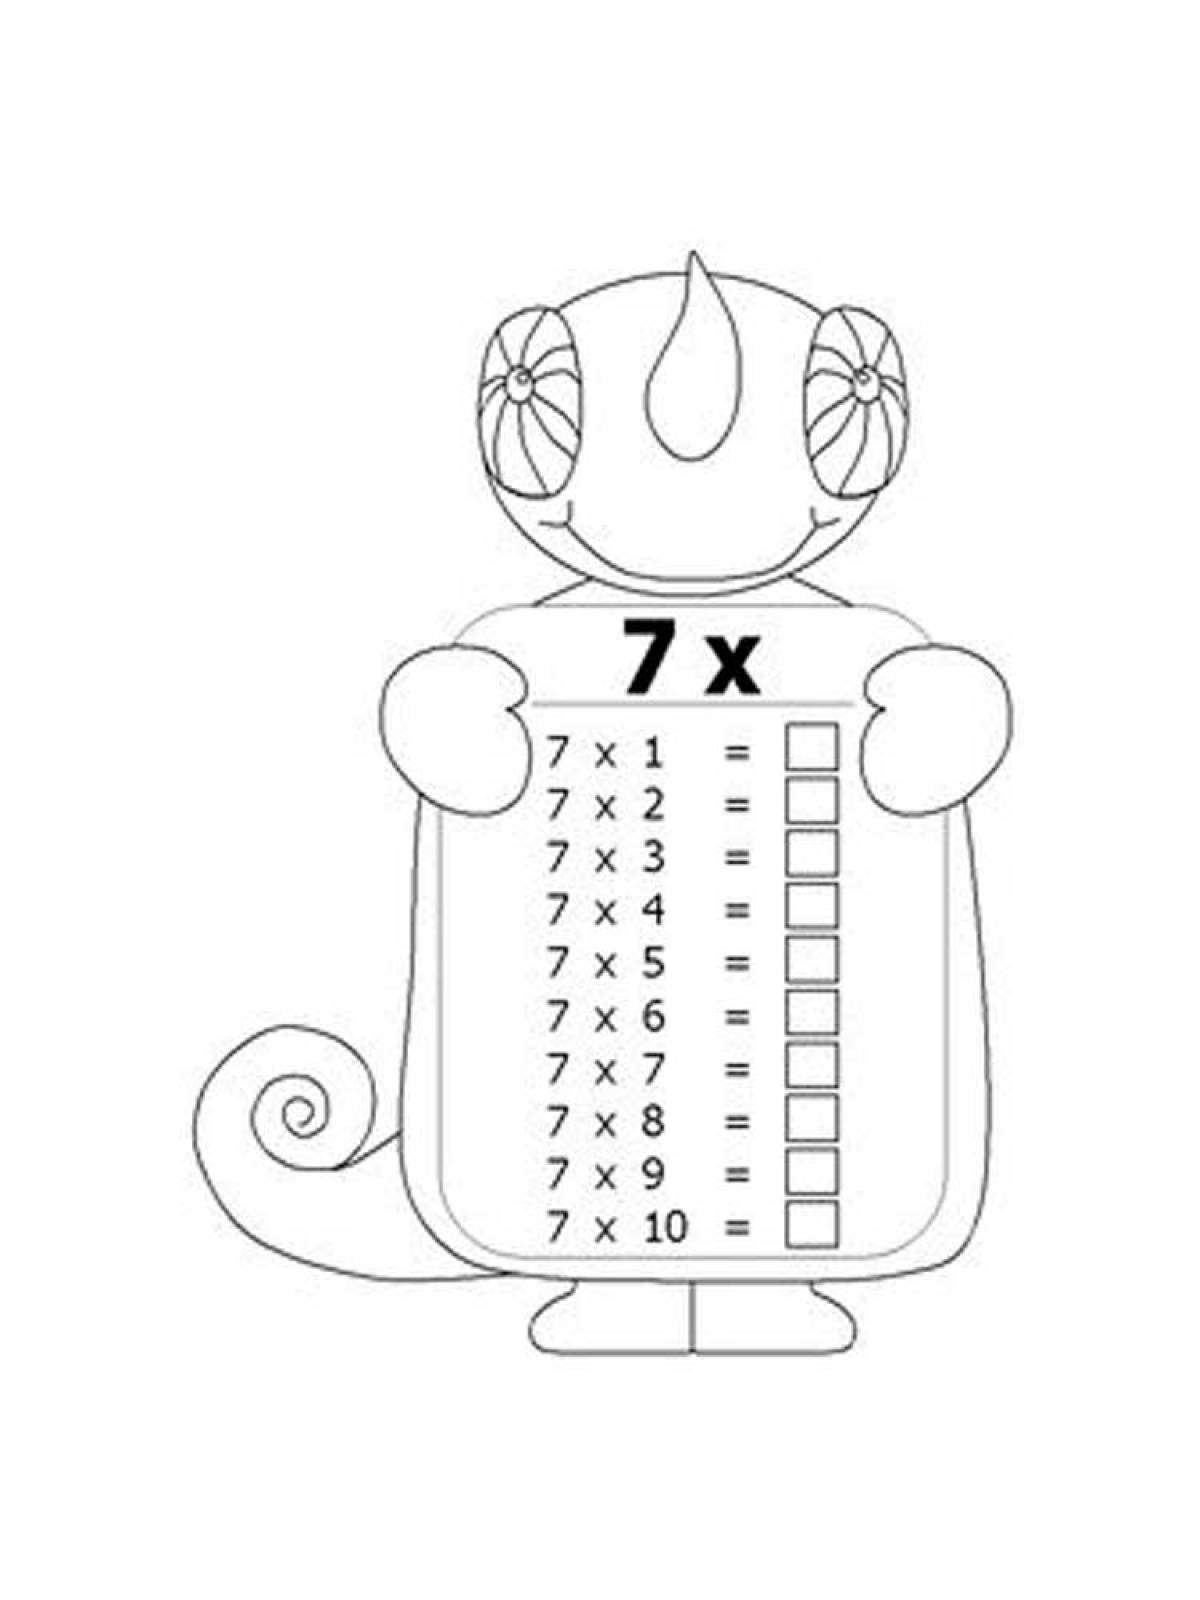 Multiplication table 1